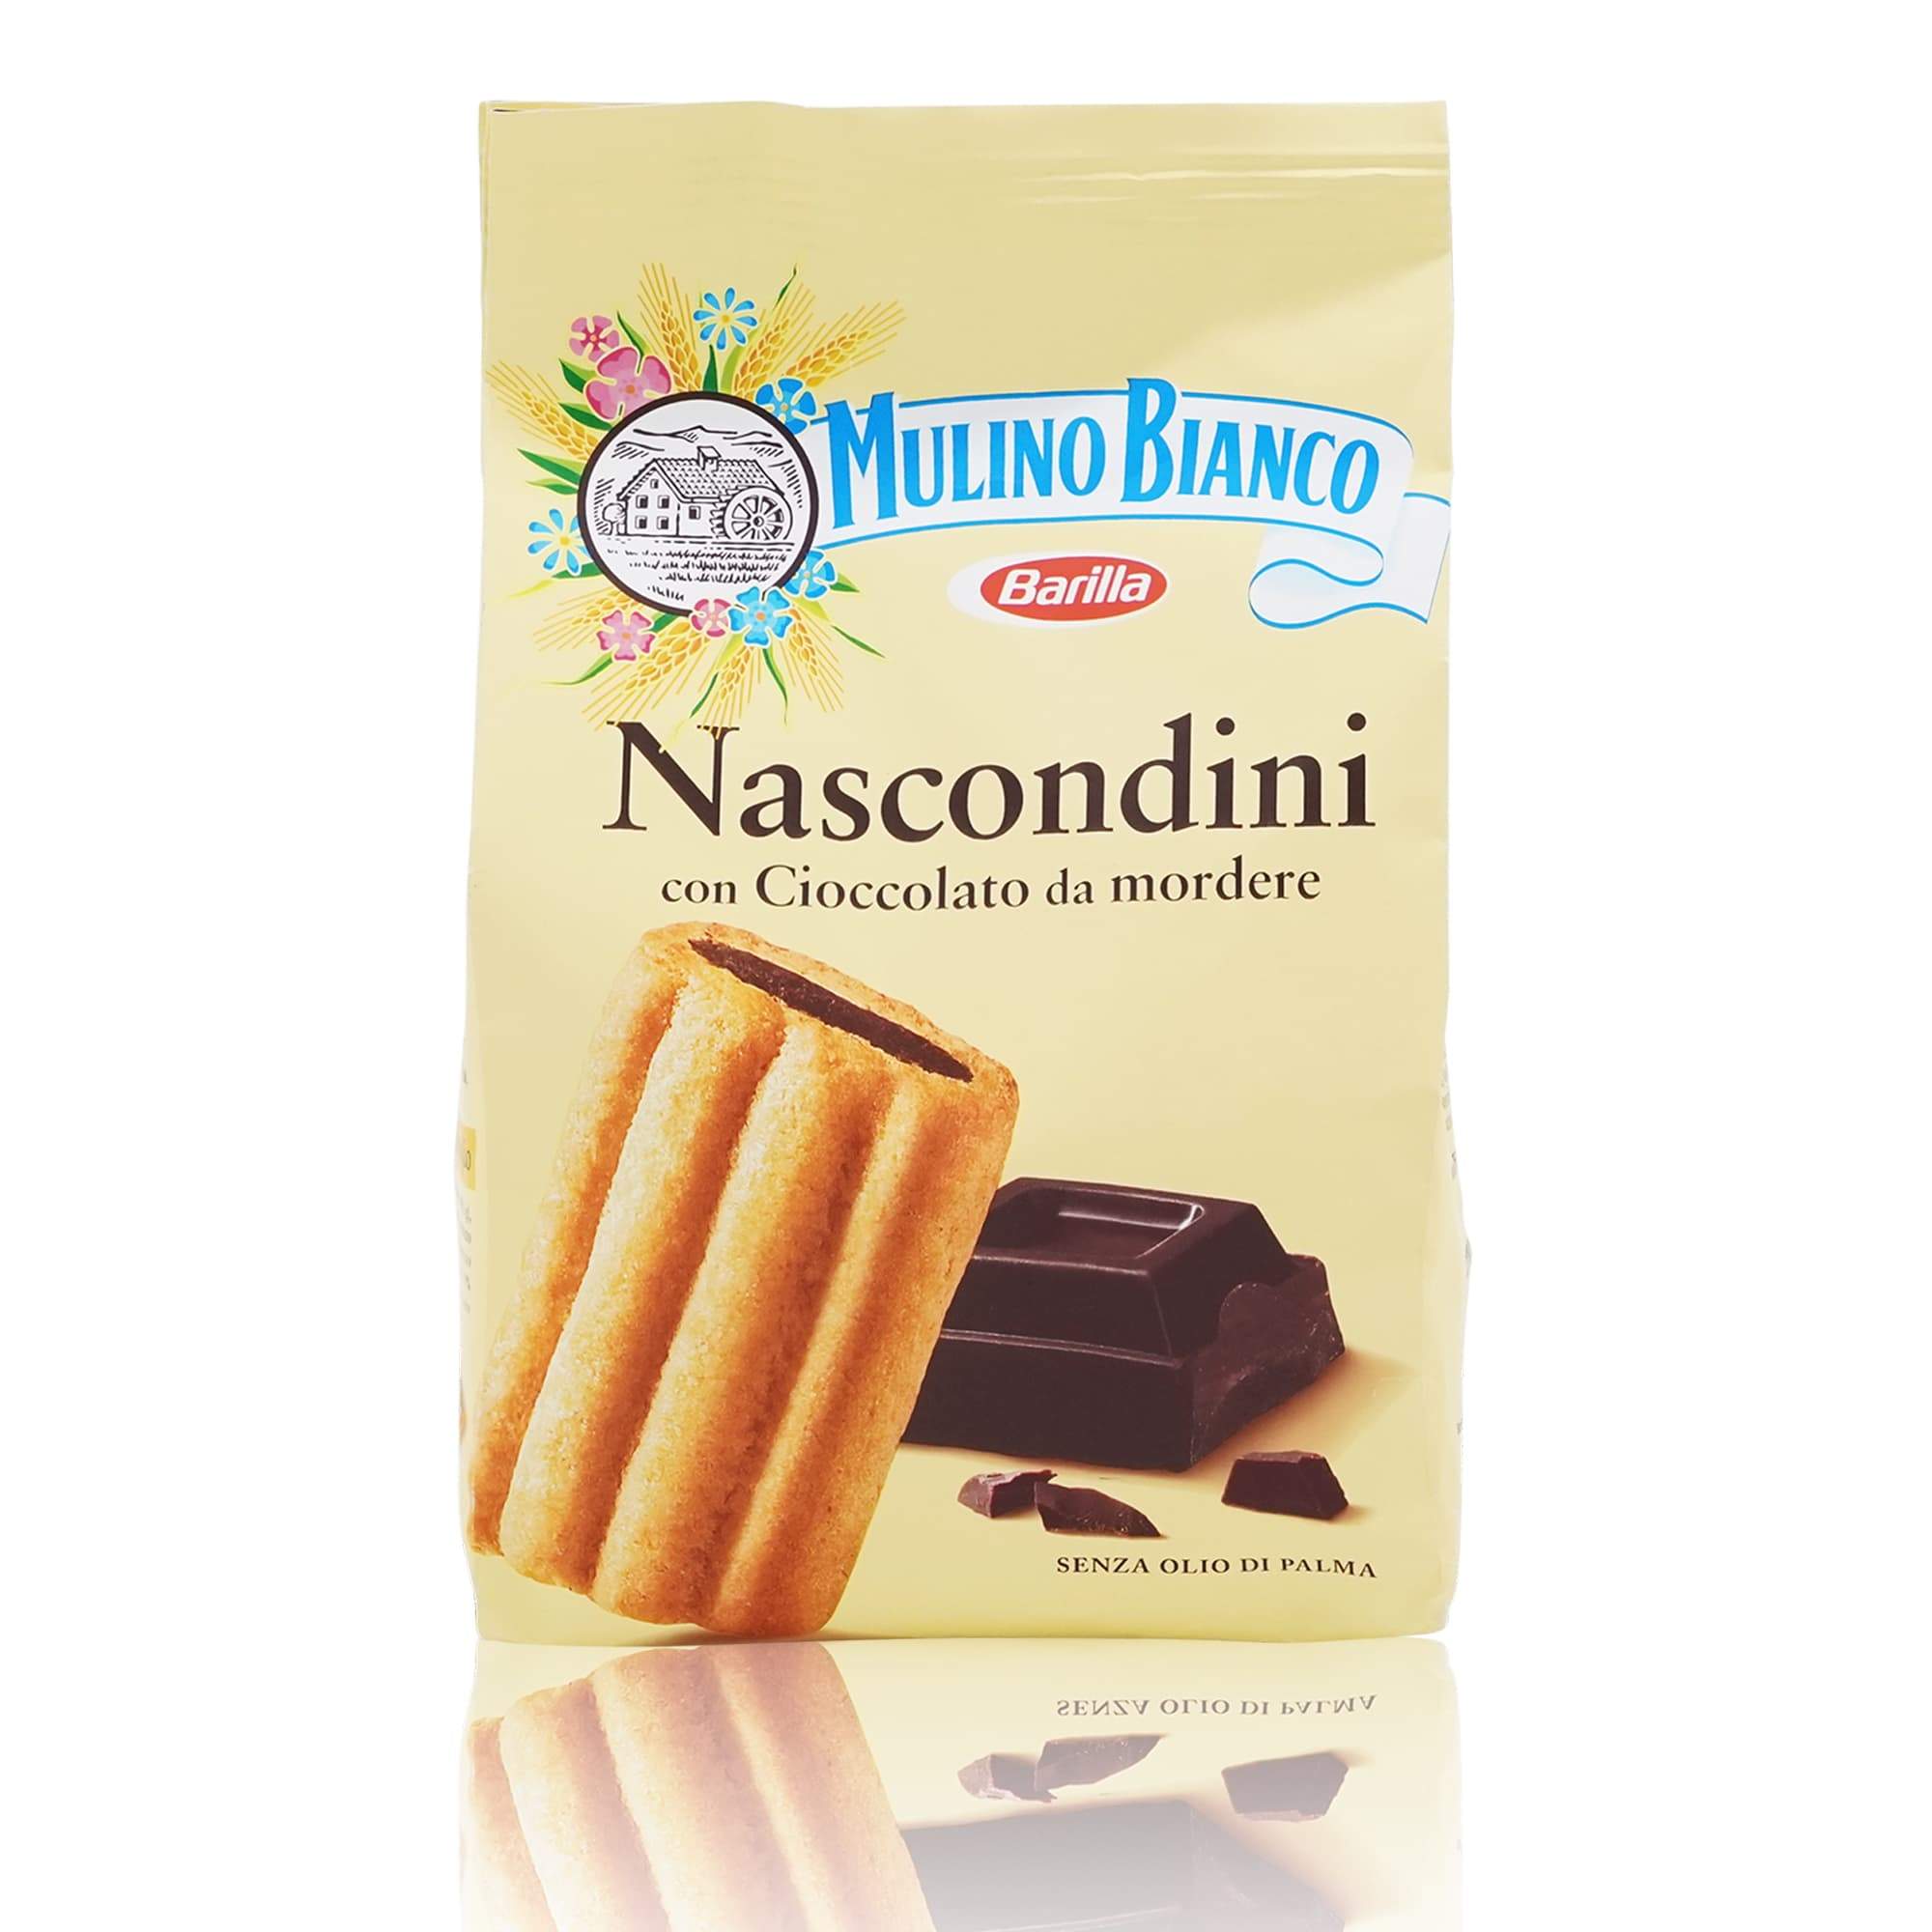 MULINO BIANCO Nascondini Kekse - 0,330kg - italienisch-einkaufen.de